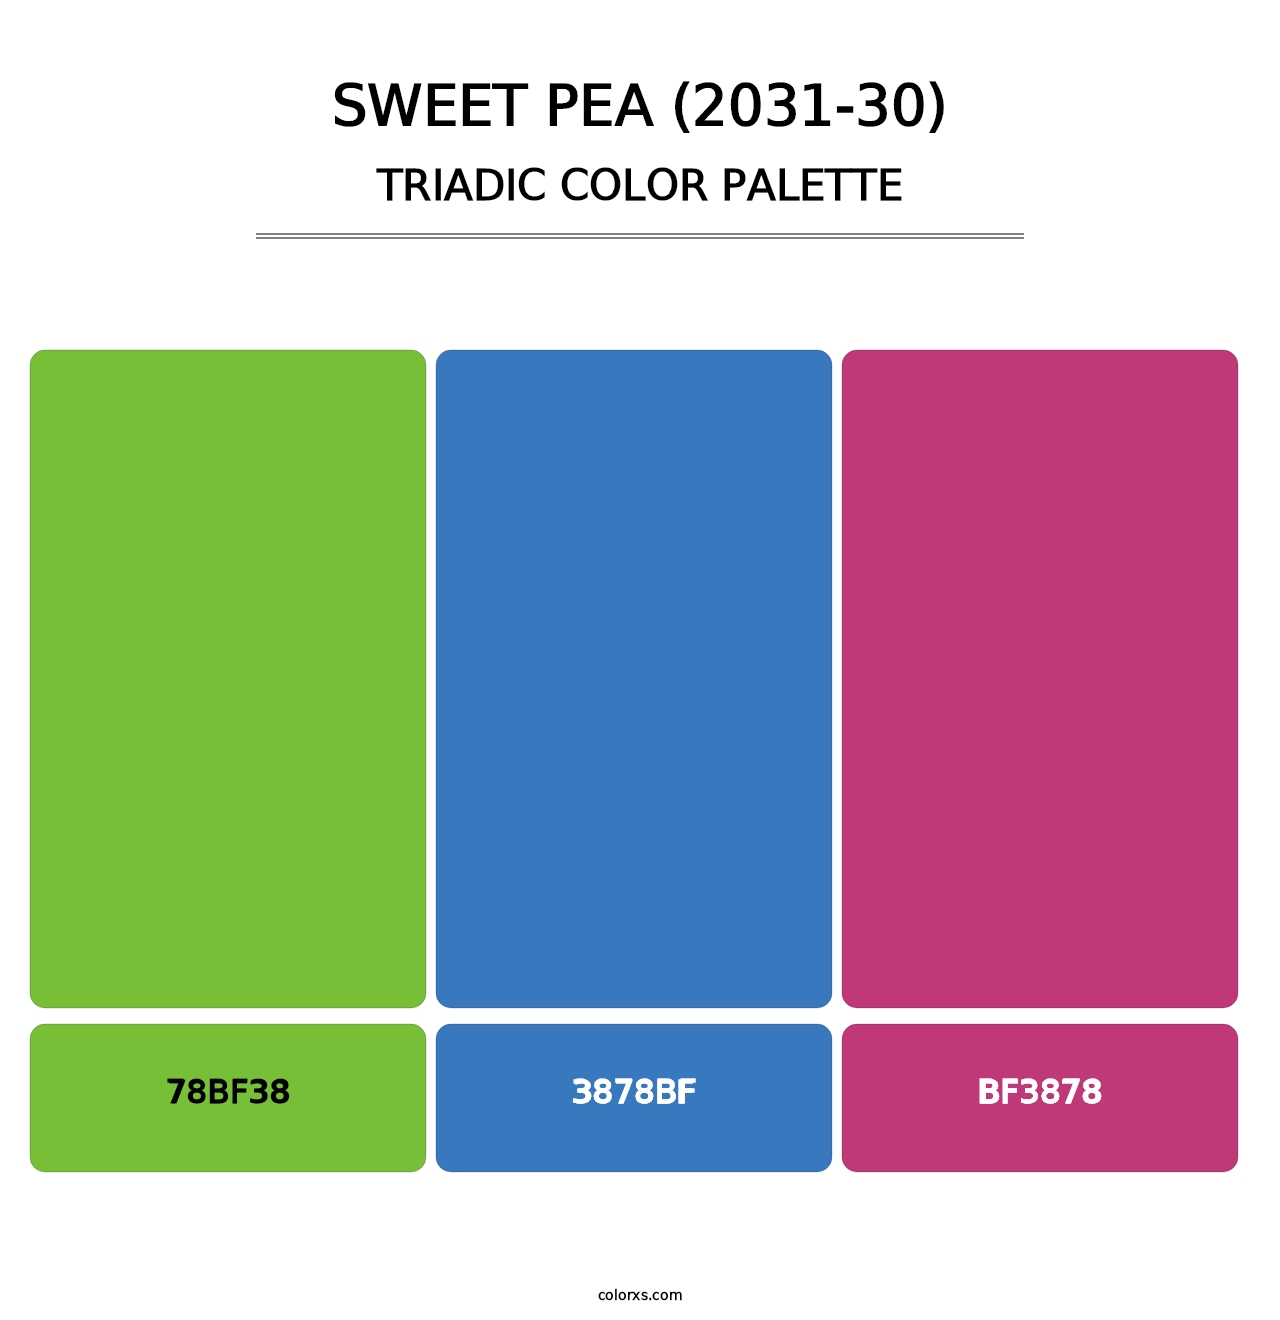 Sweet Pea (2031-30) - Triadic Color Palette